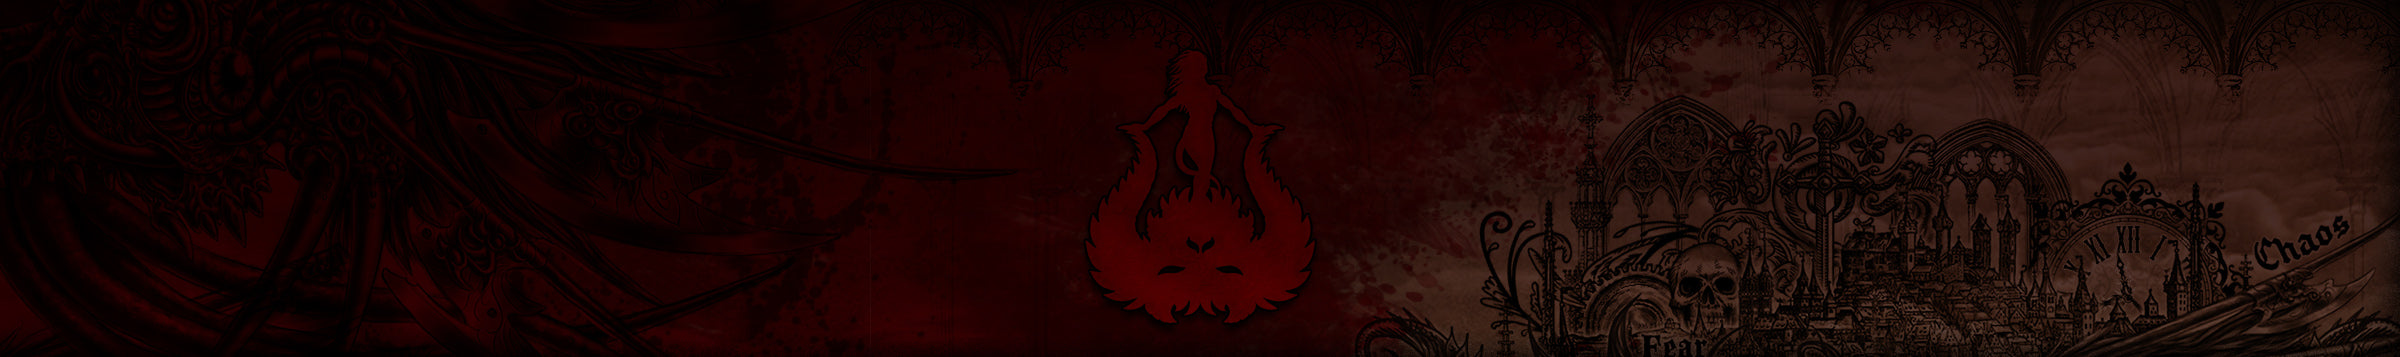 Abysm Internal Logo Banner